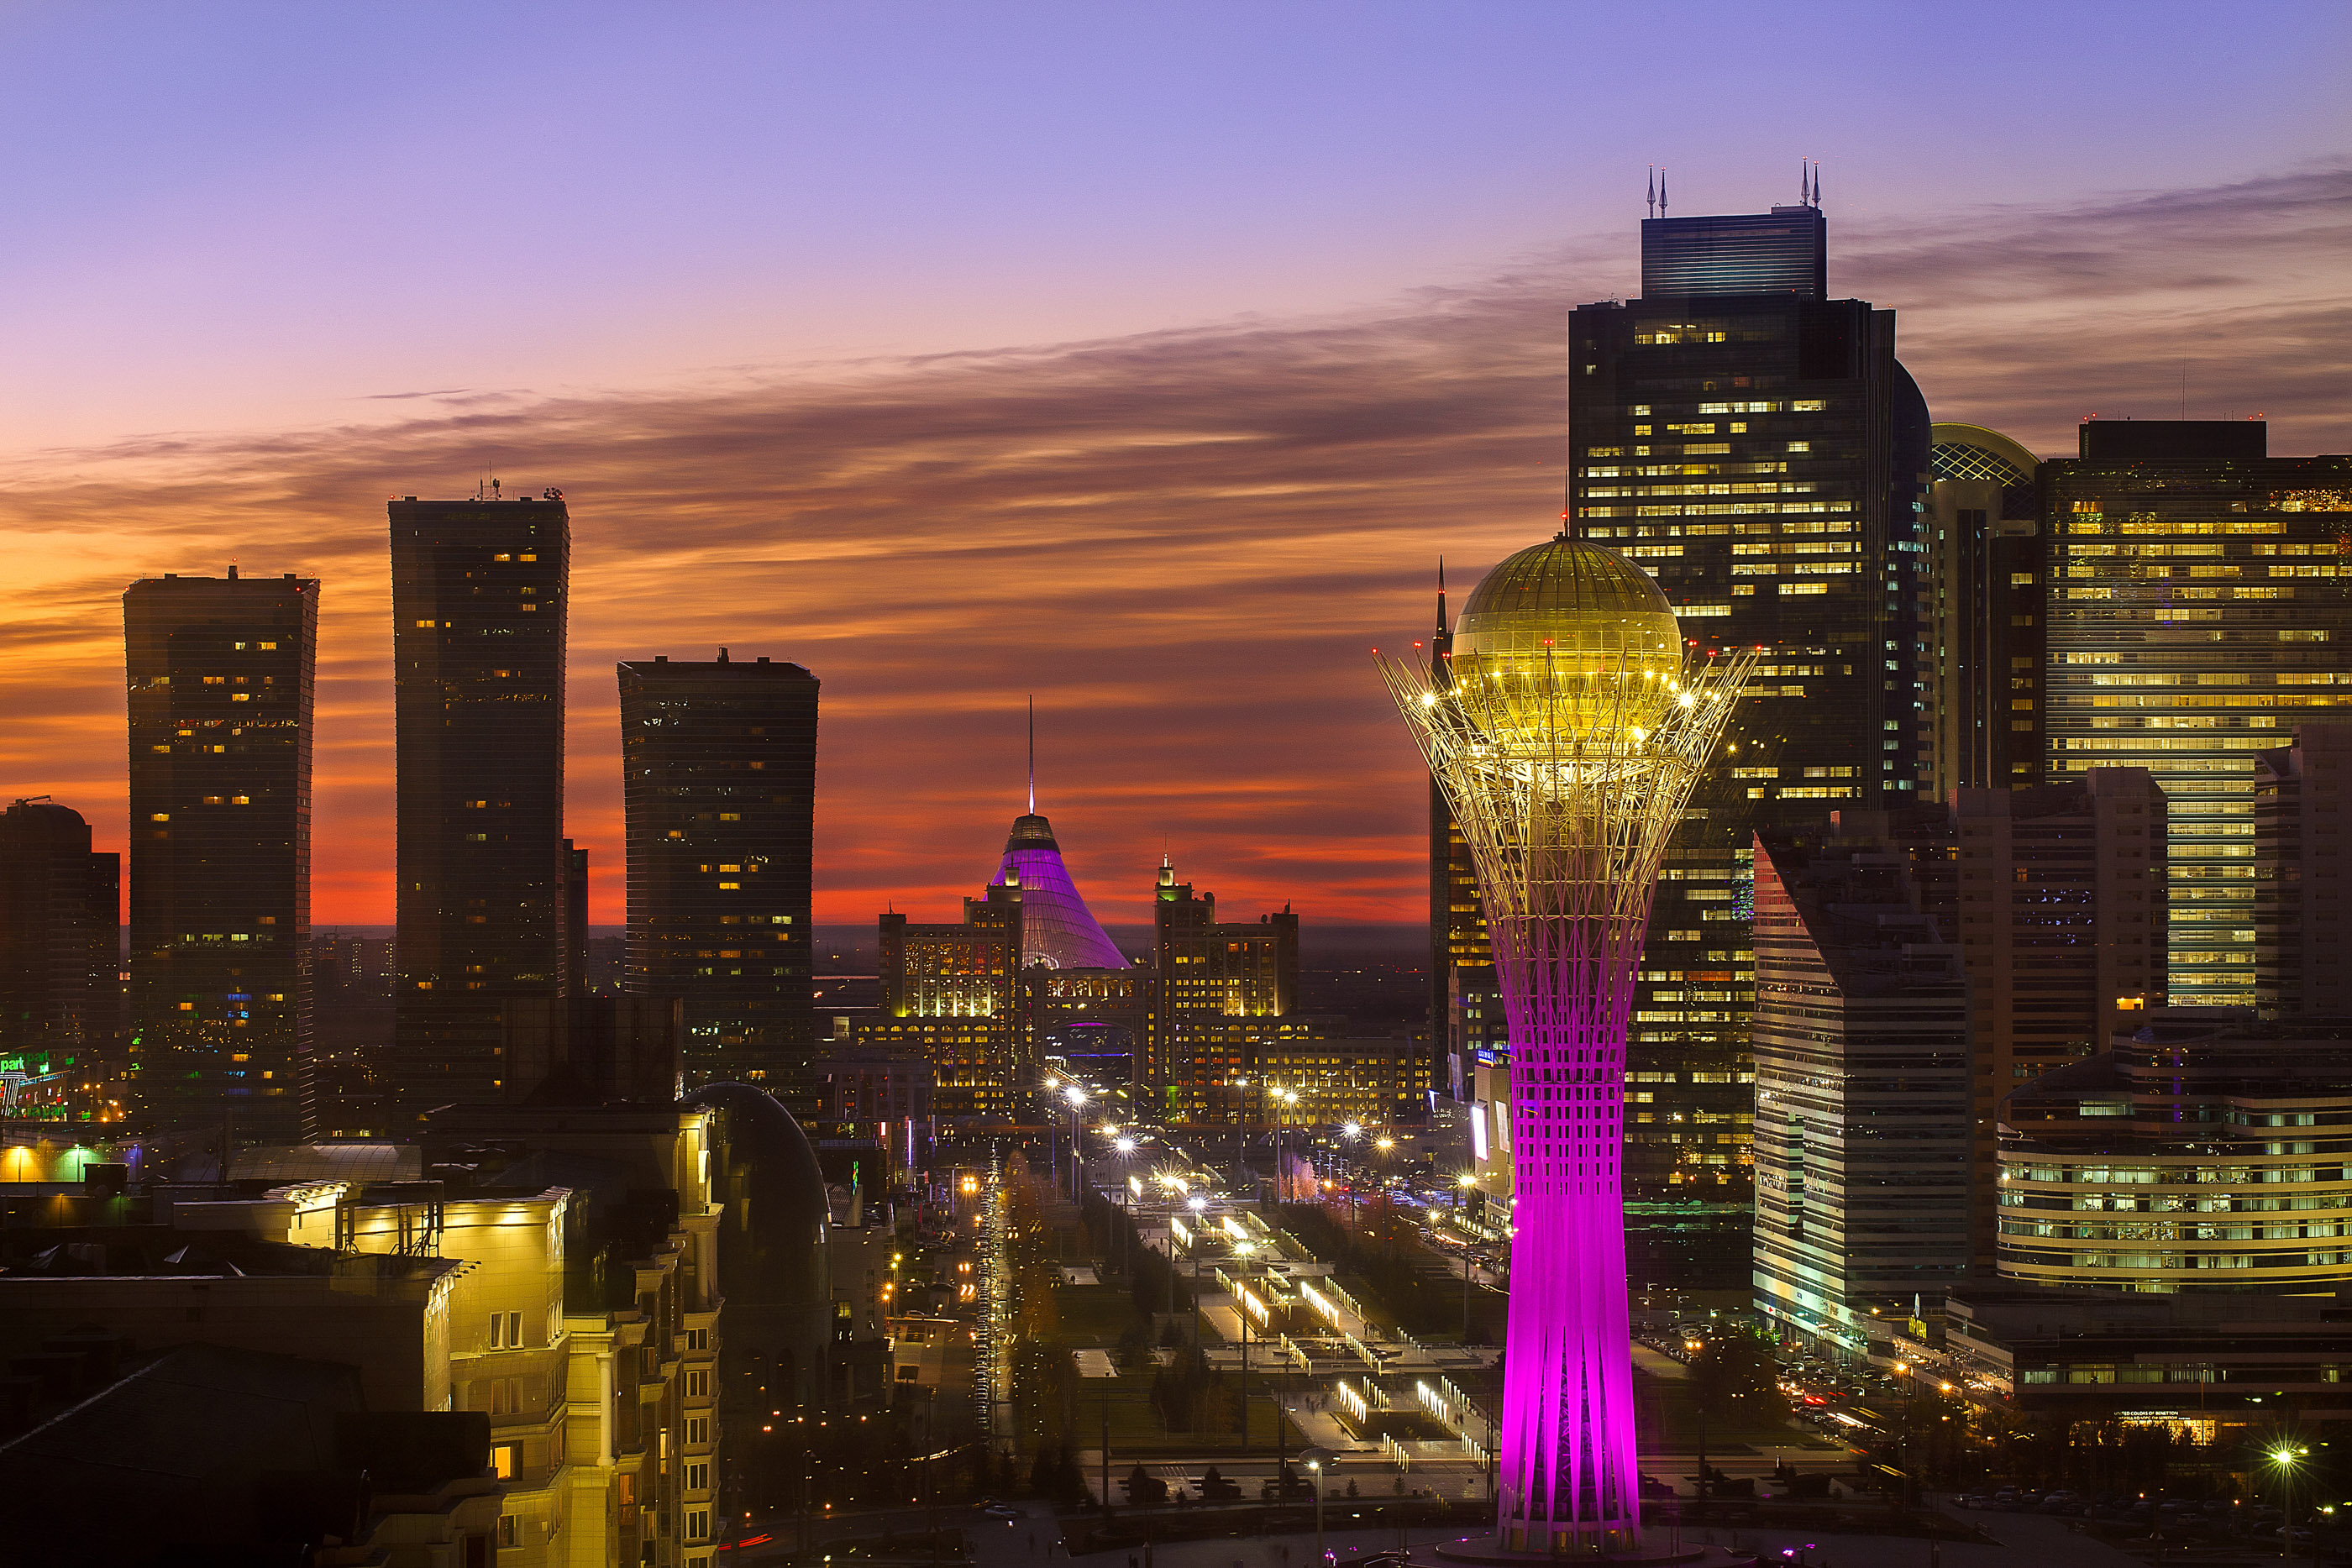 Водно-зеленый бульвар Астана